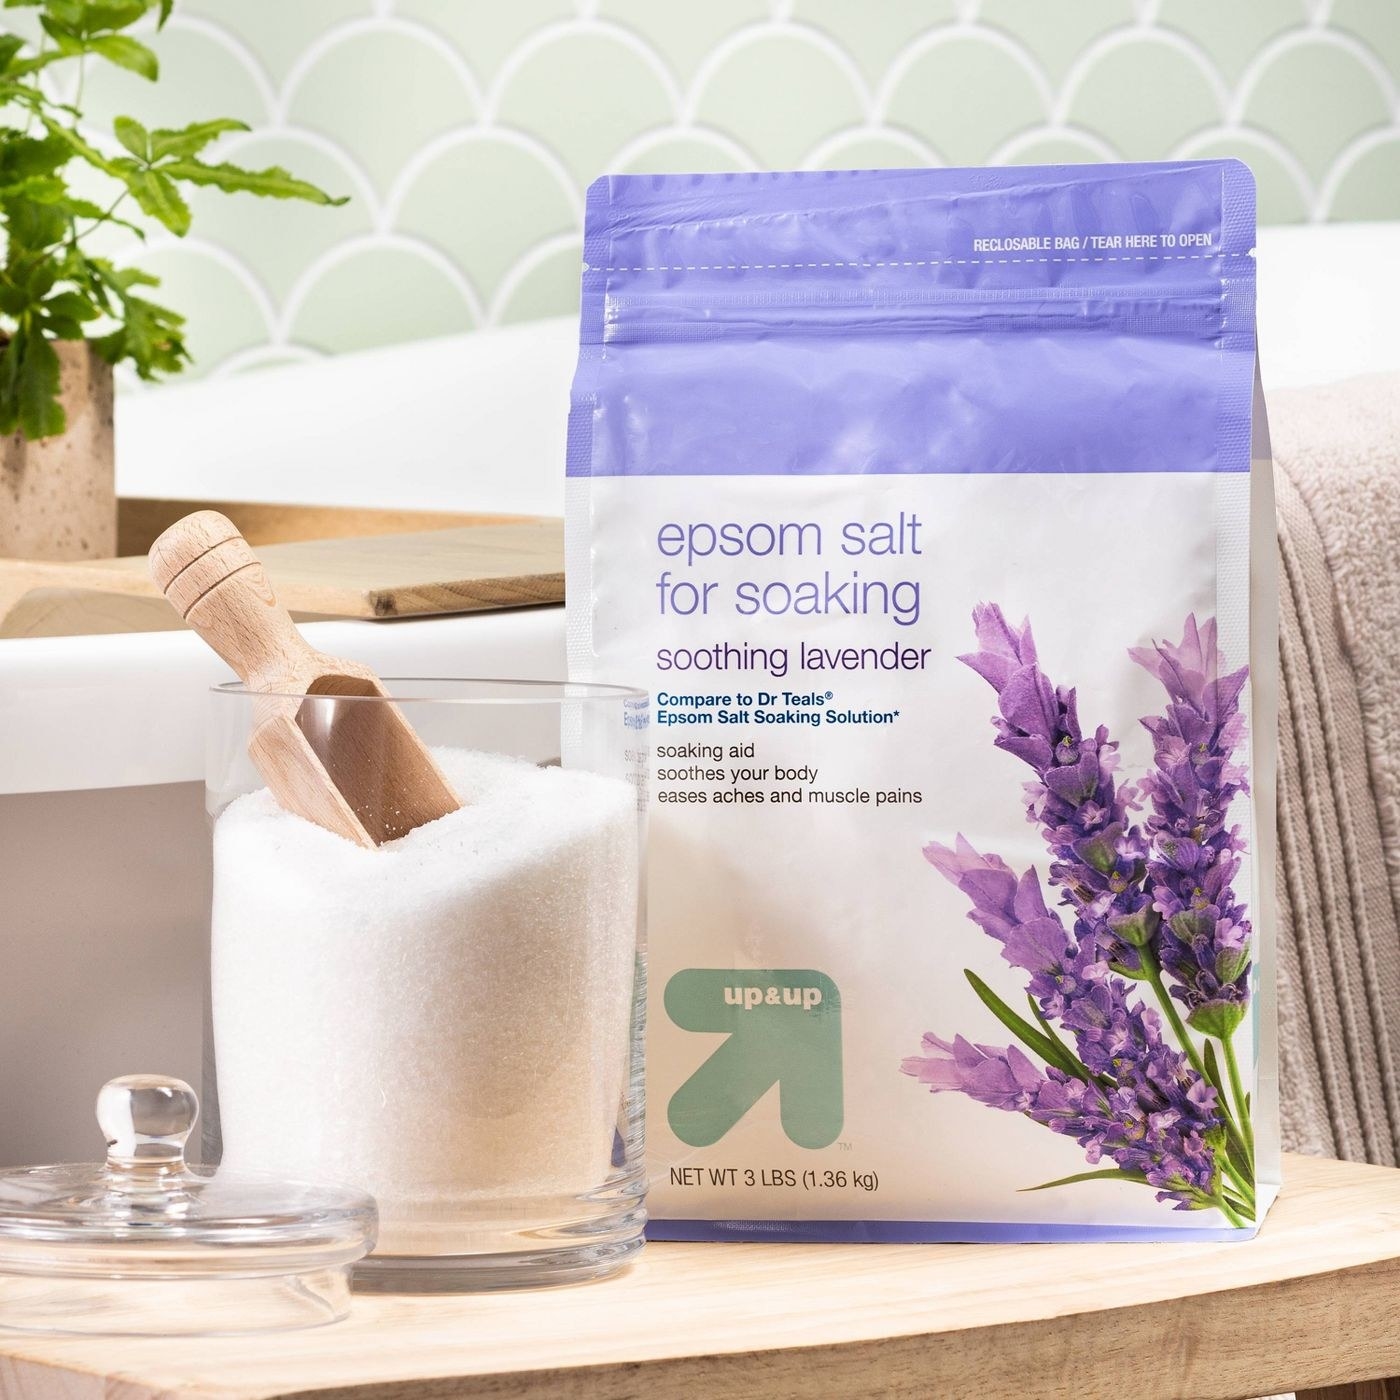 The soothing lavender epsom bath salt for soaking